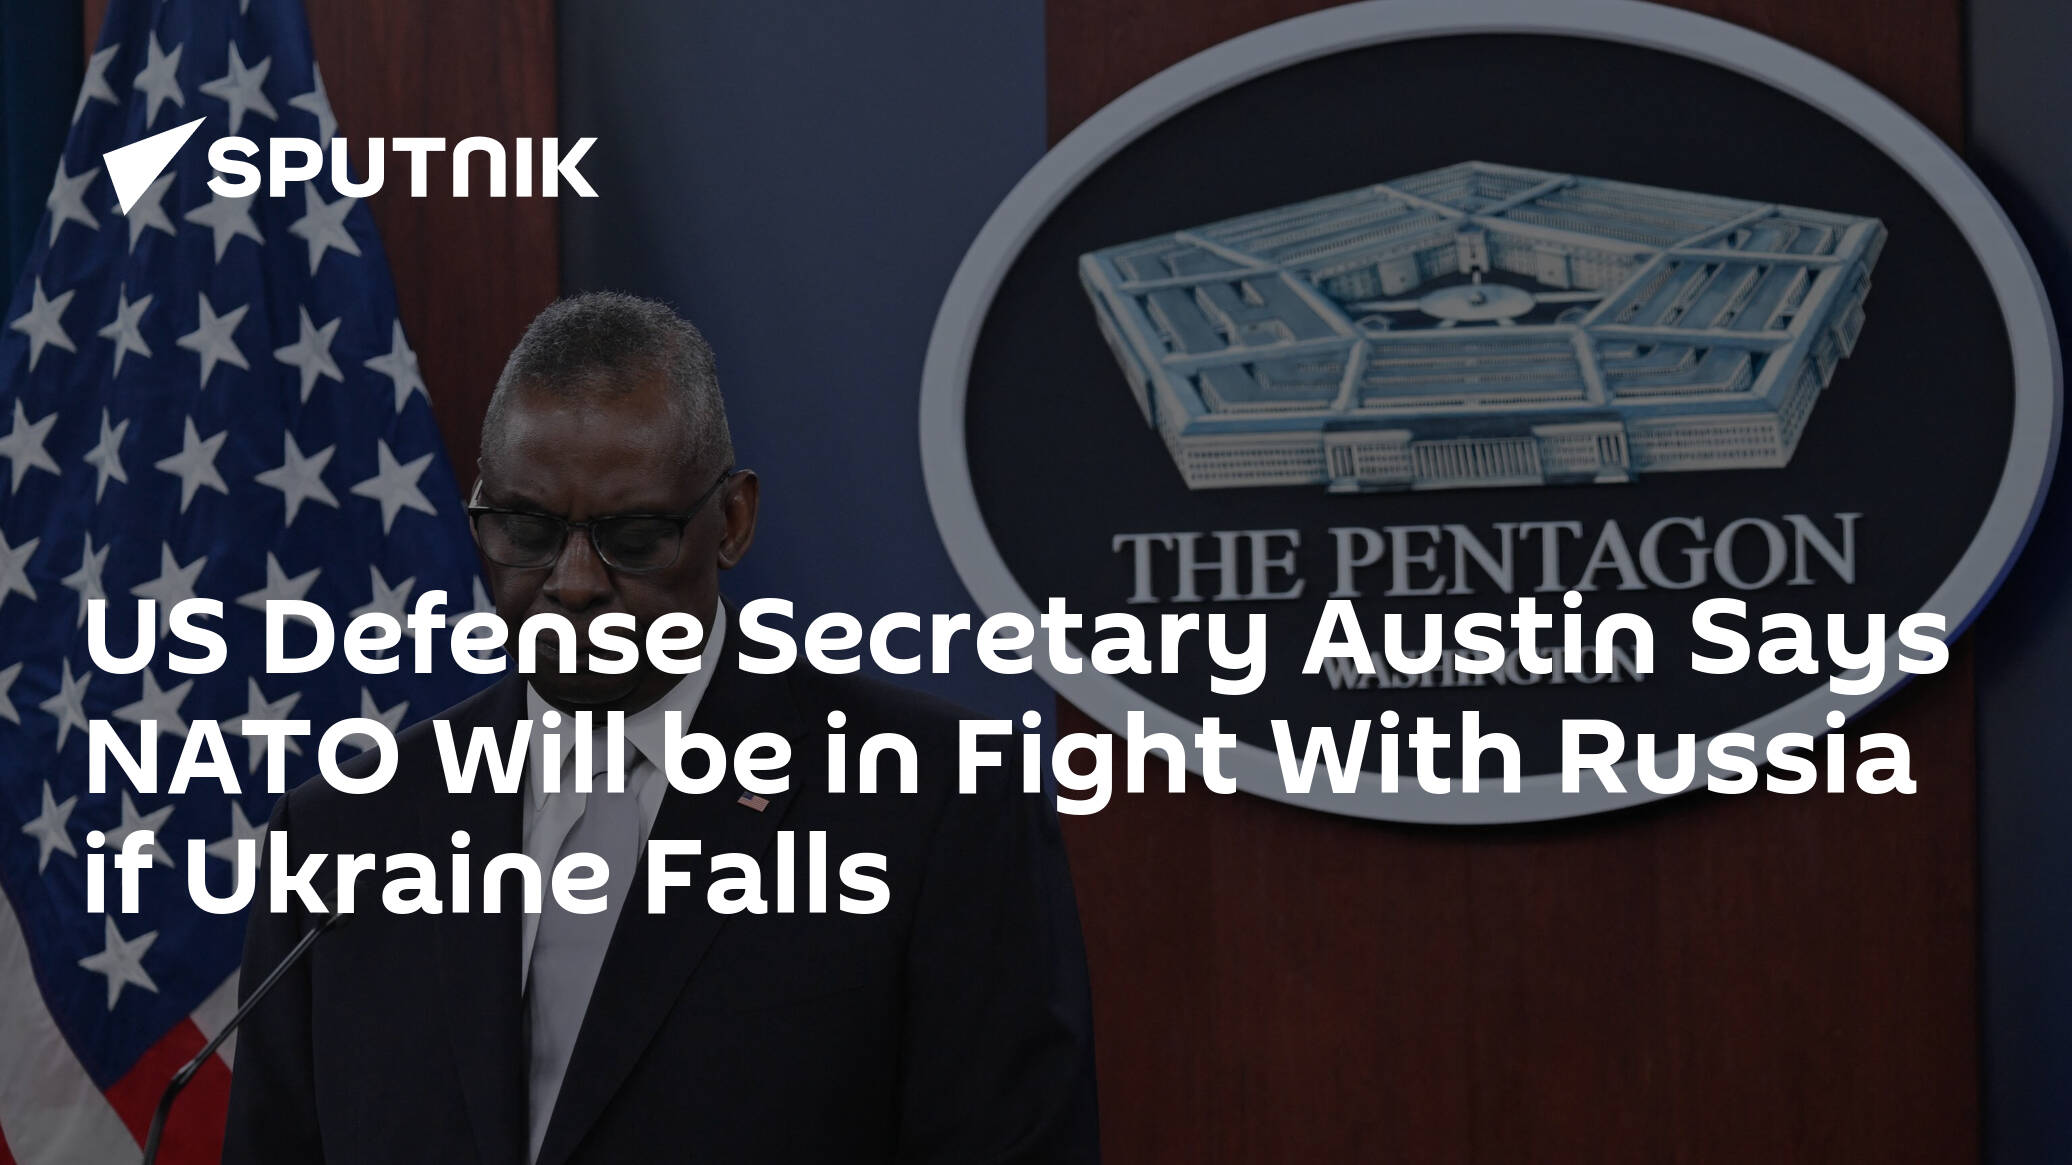 US Defense Secretary Austin Says NATO Will be in Fight With Russia if Ukraine Falls